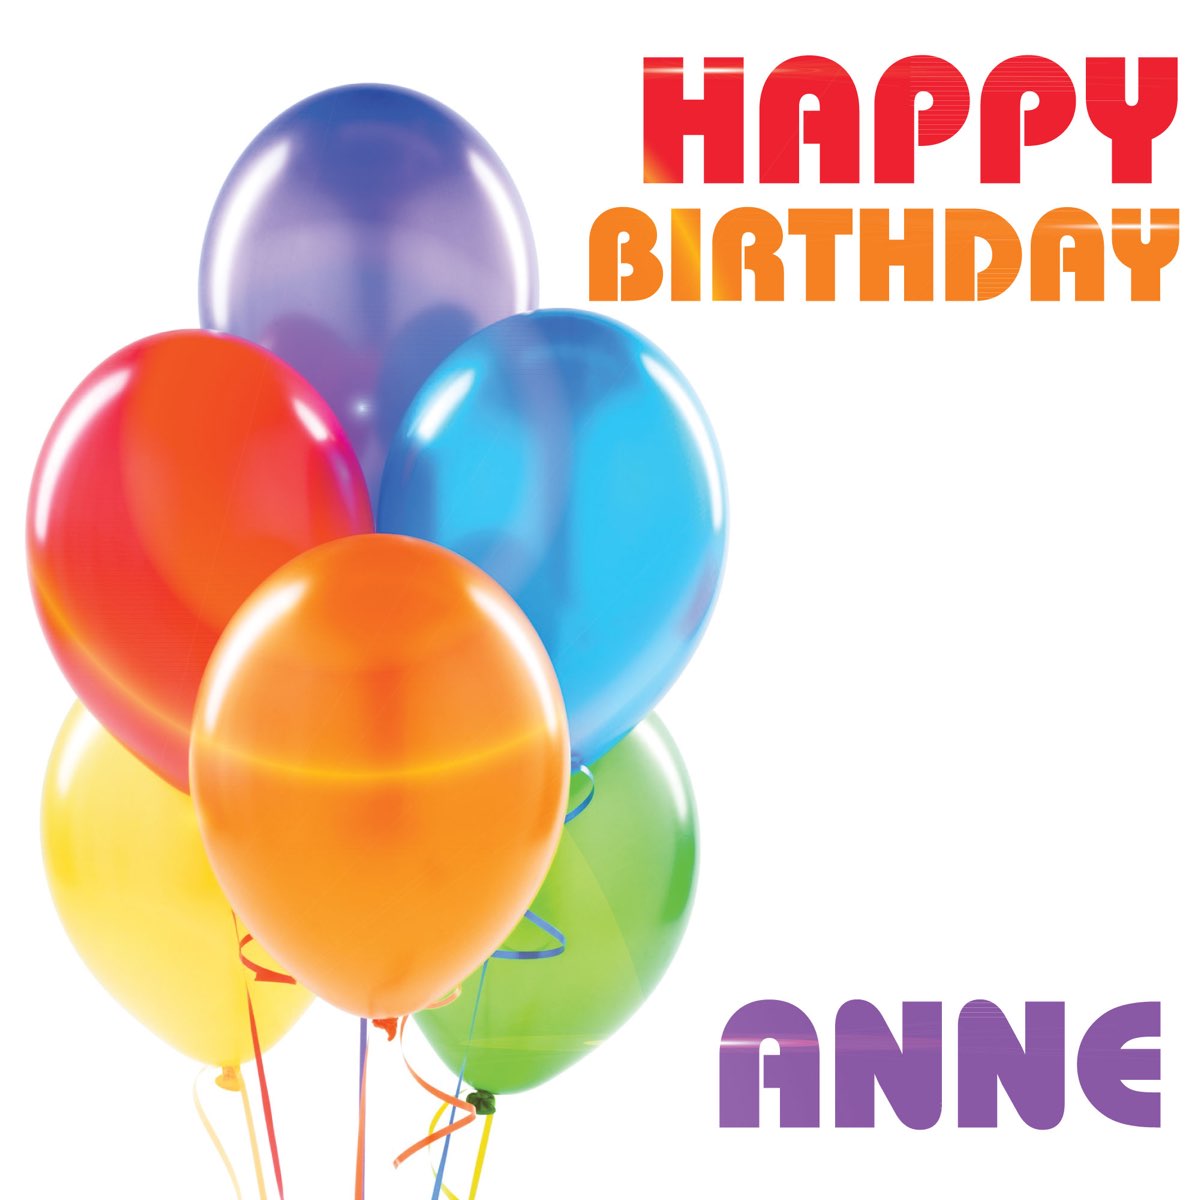 Happy Birthday Anne (Single) by The Birthday Crew on Apple Music